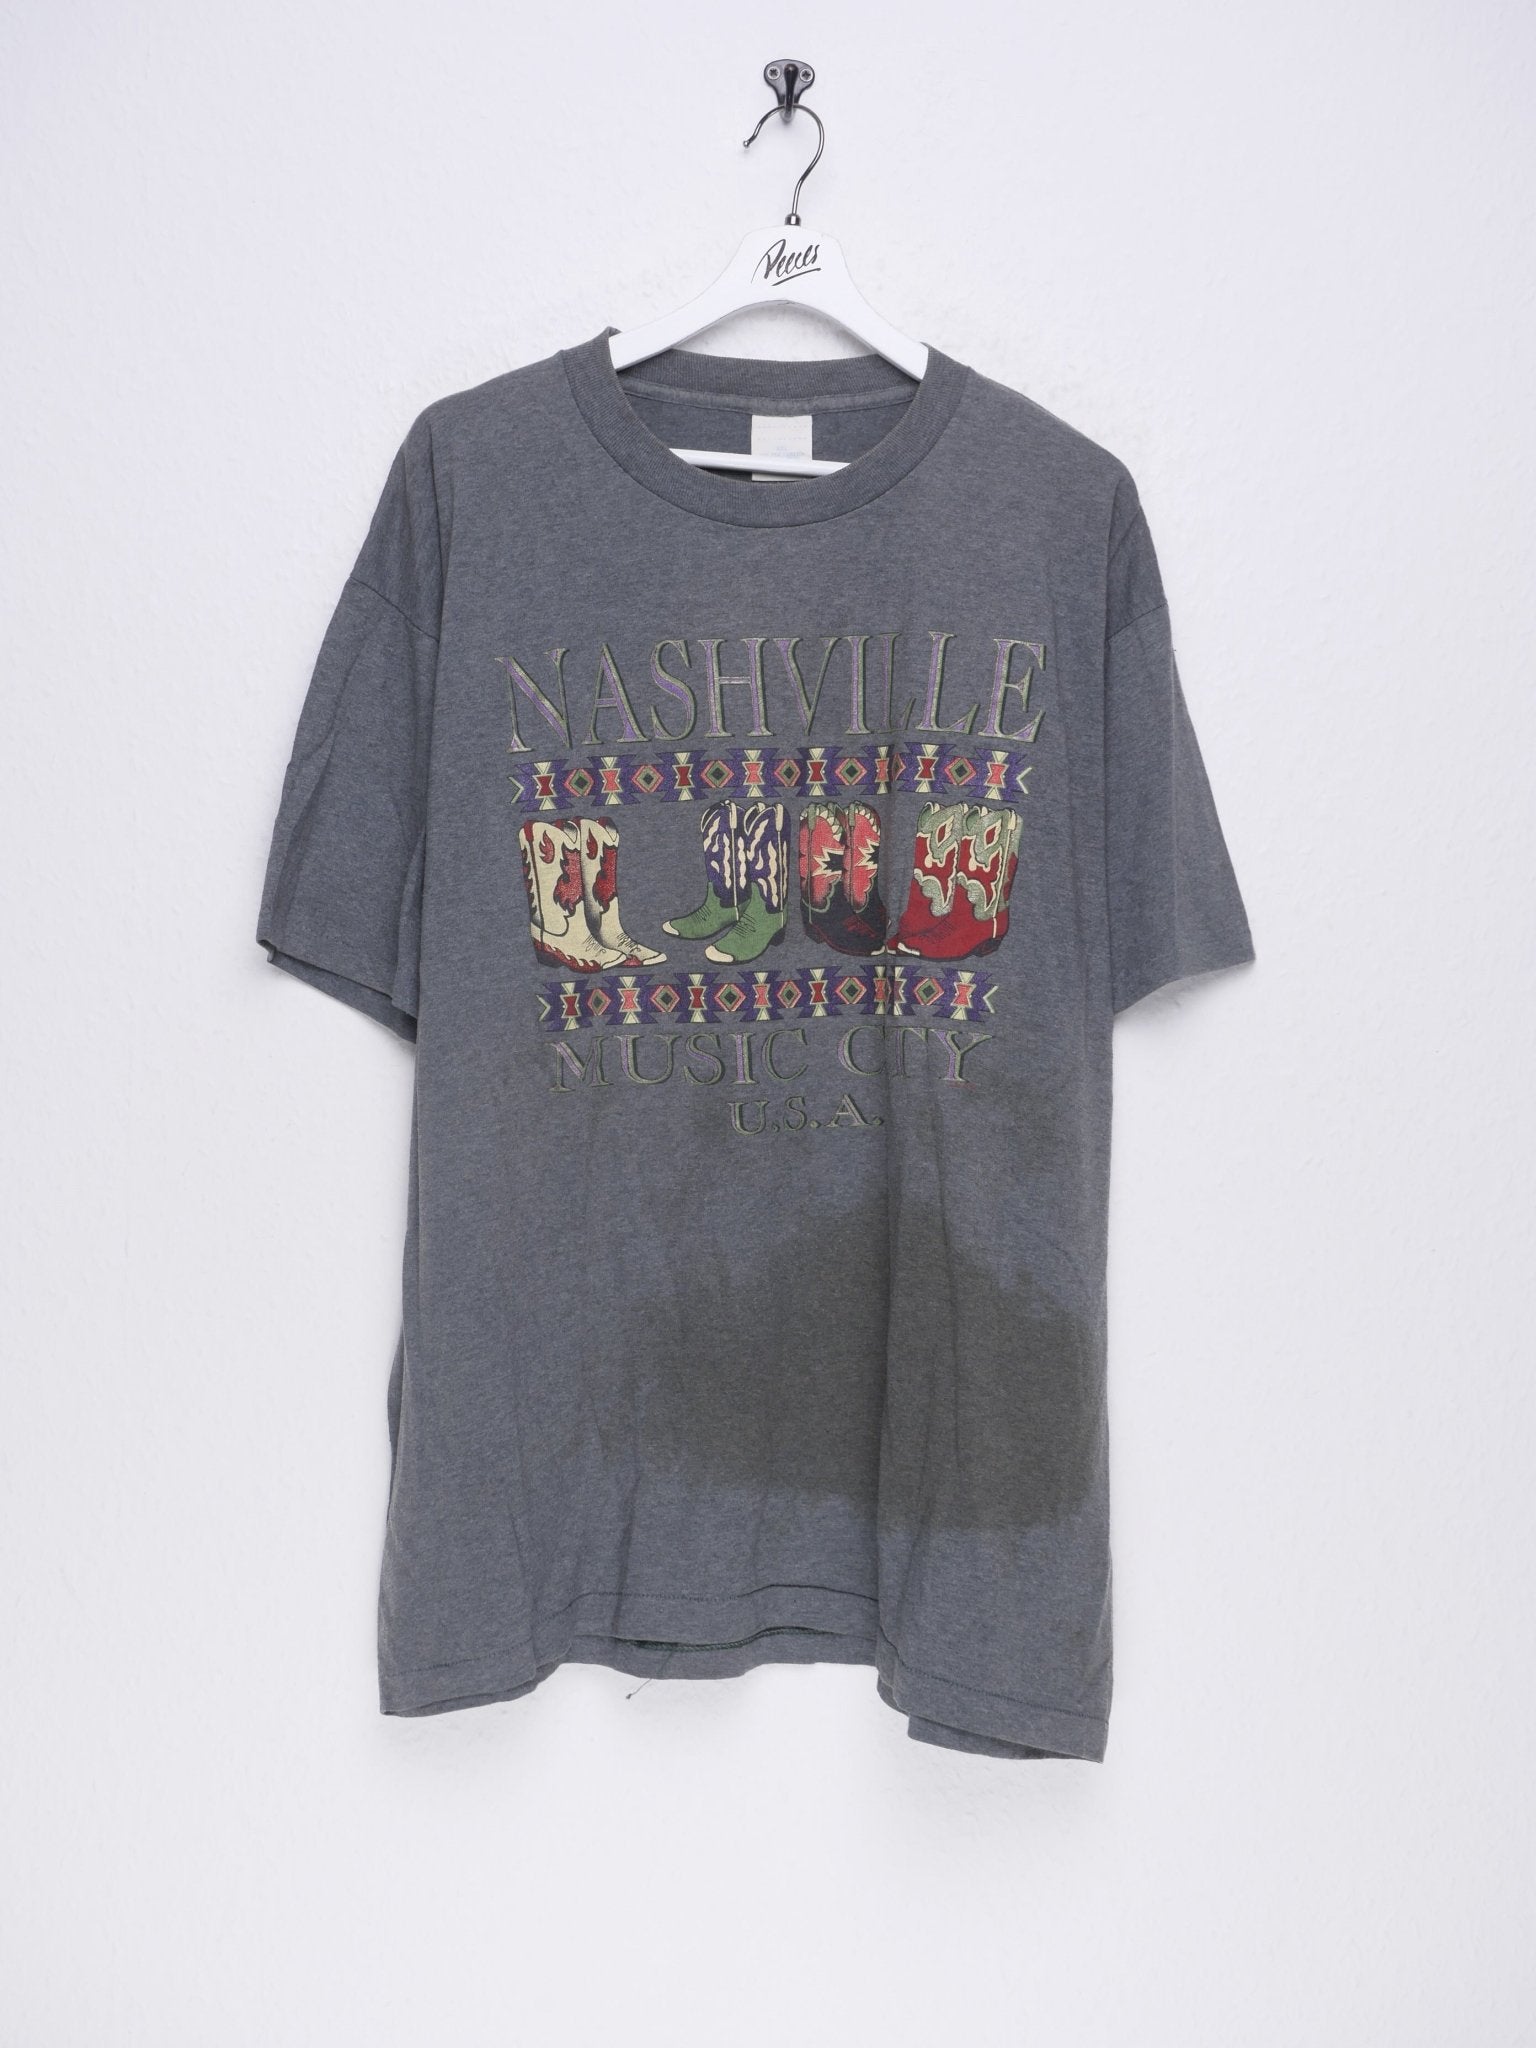 Nashville printed Graphic Vintage Shirt - Peeces